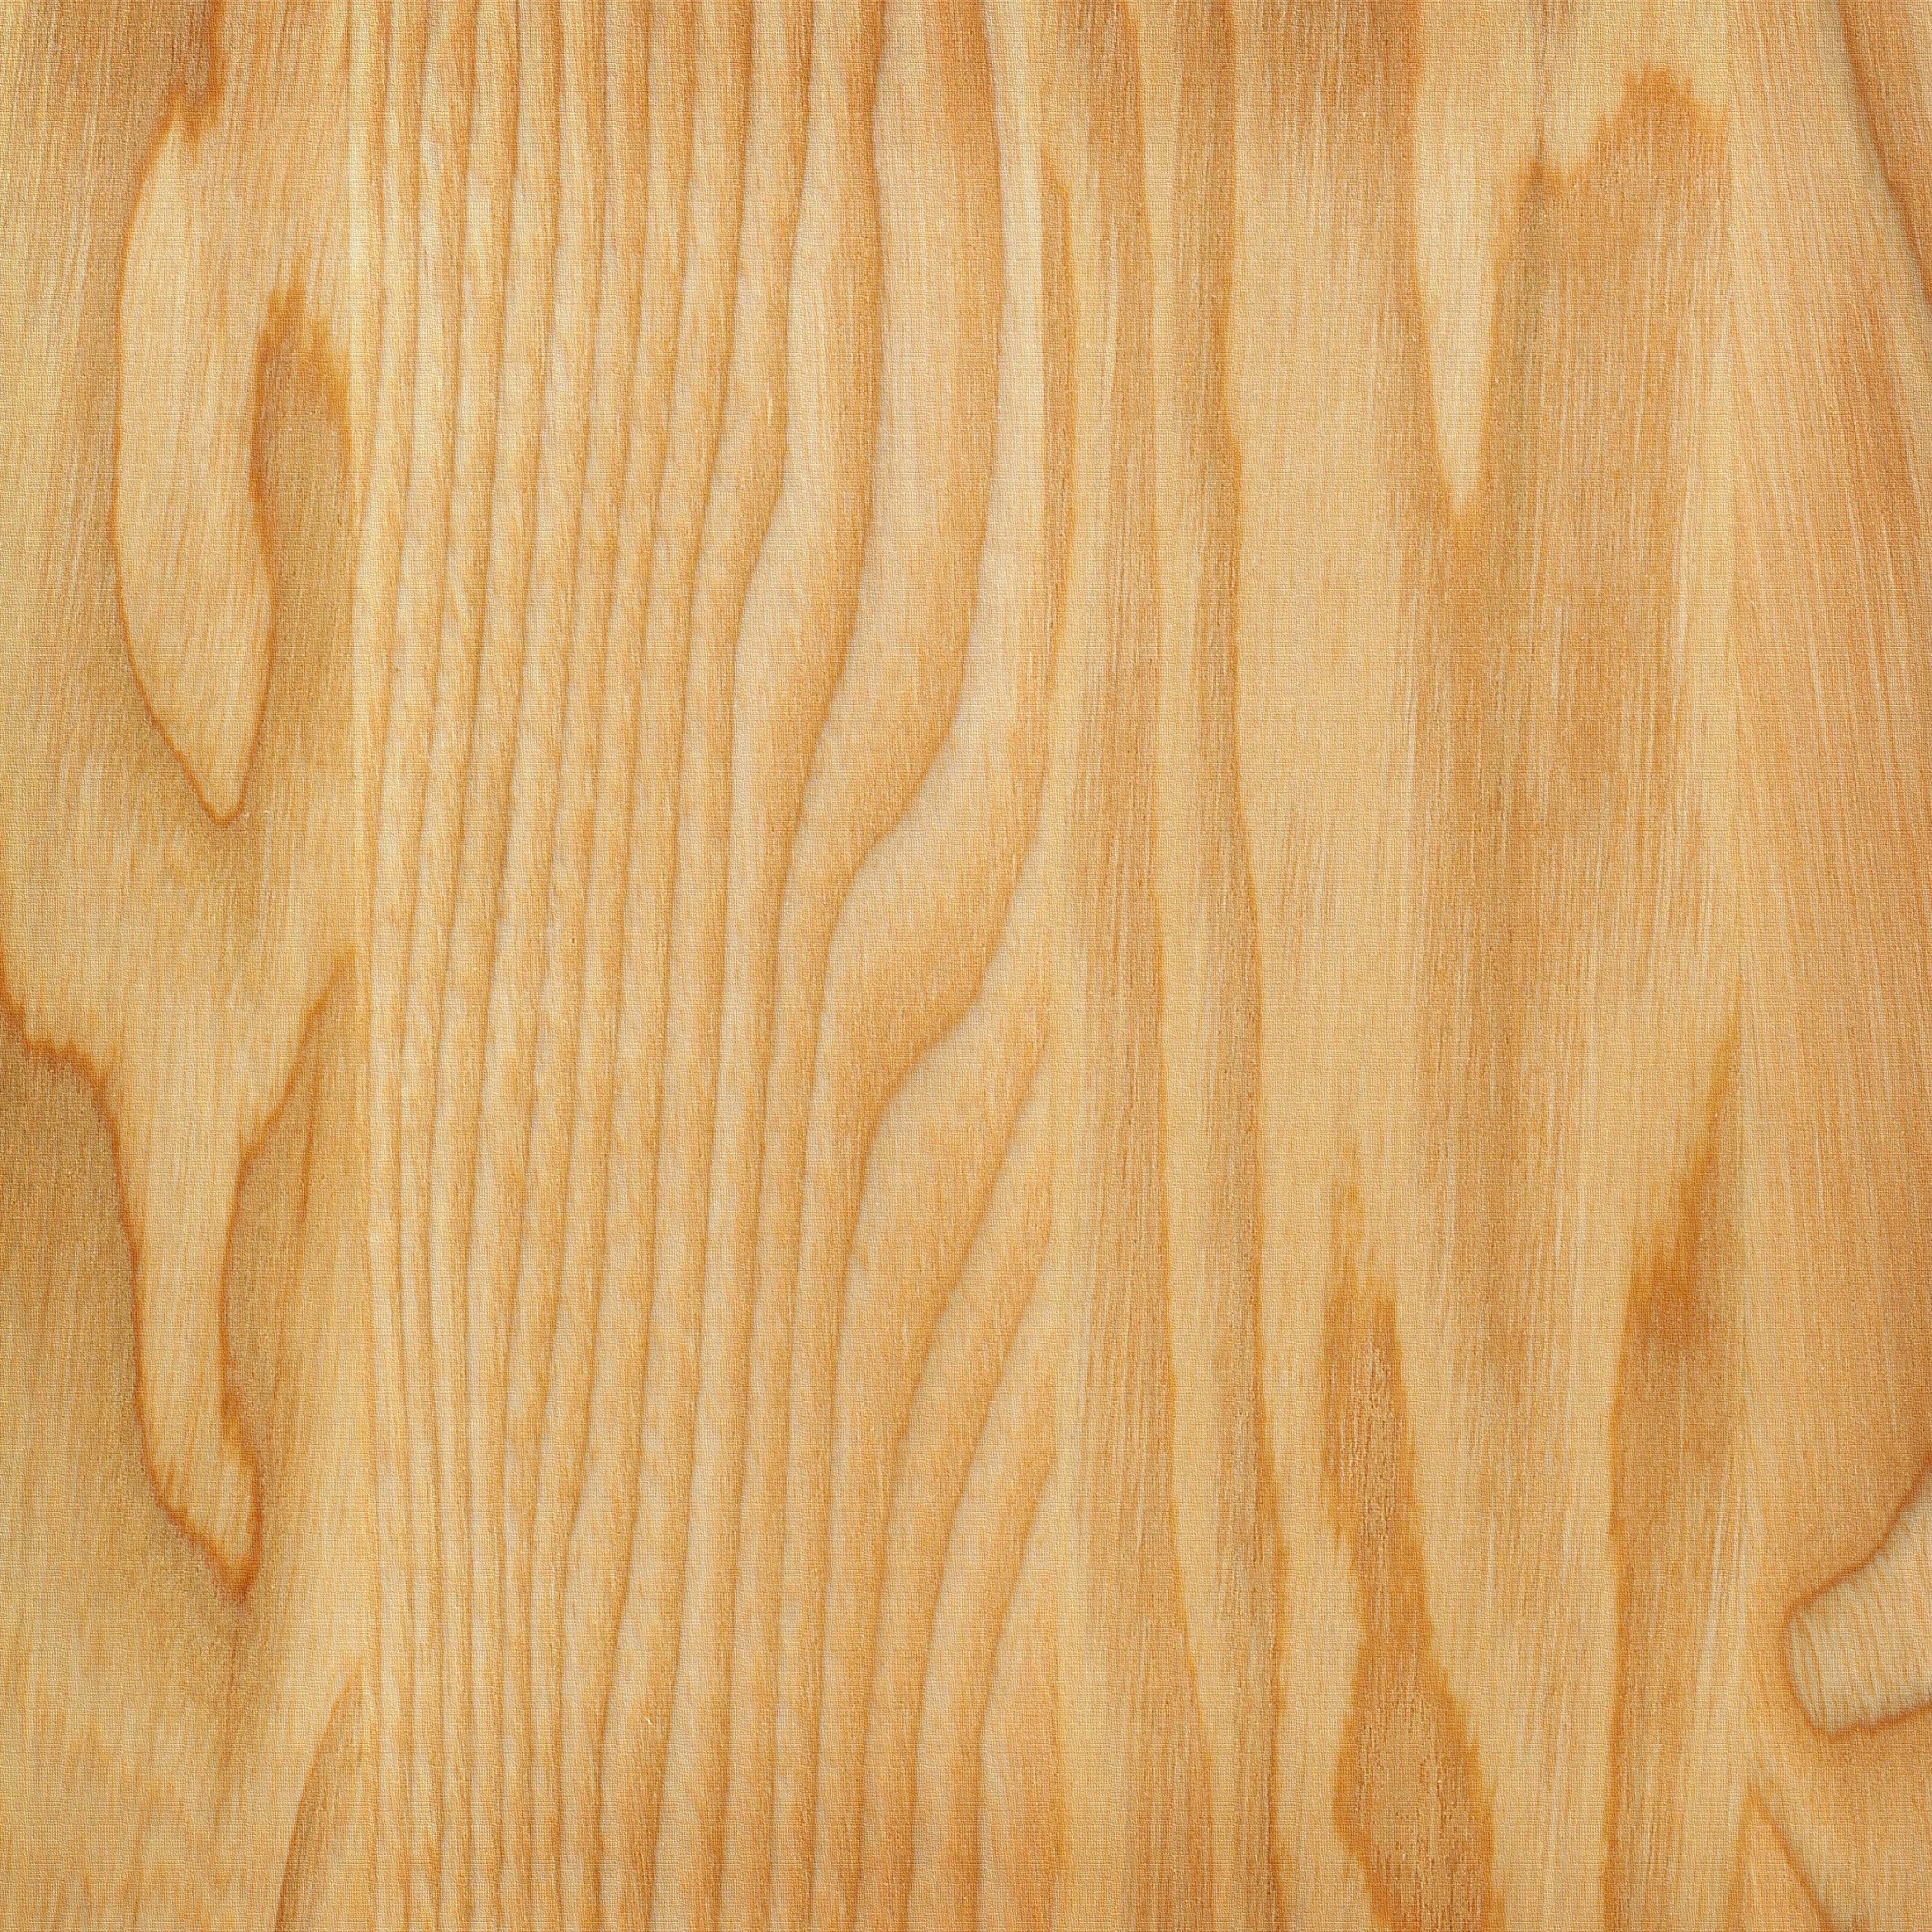 Wood Texture Long Tail  Presentation